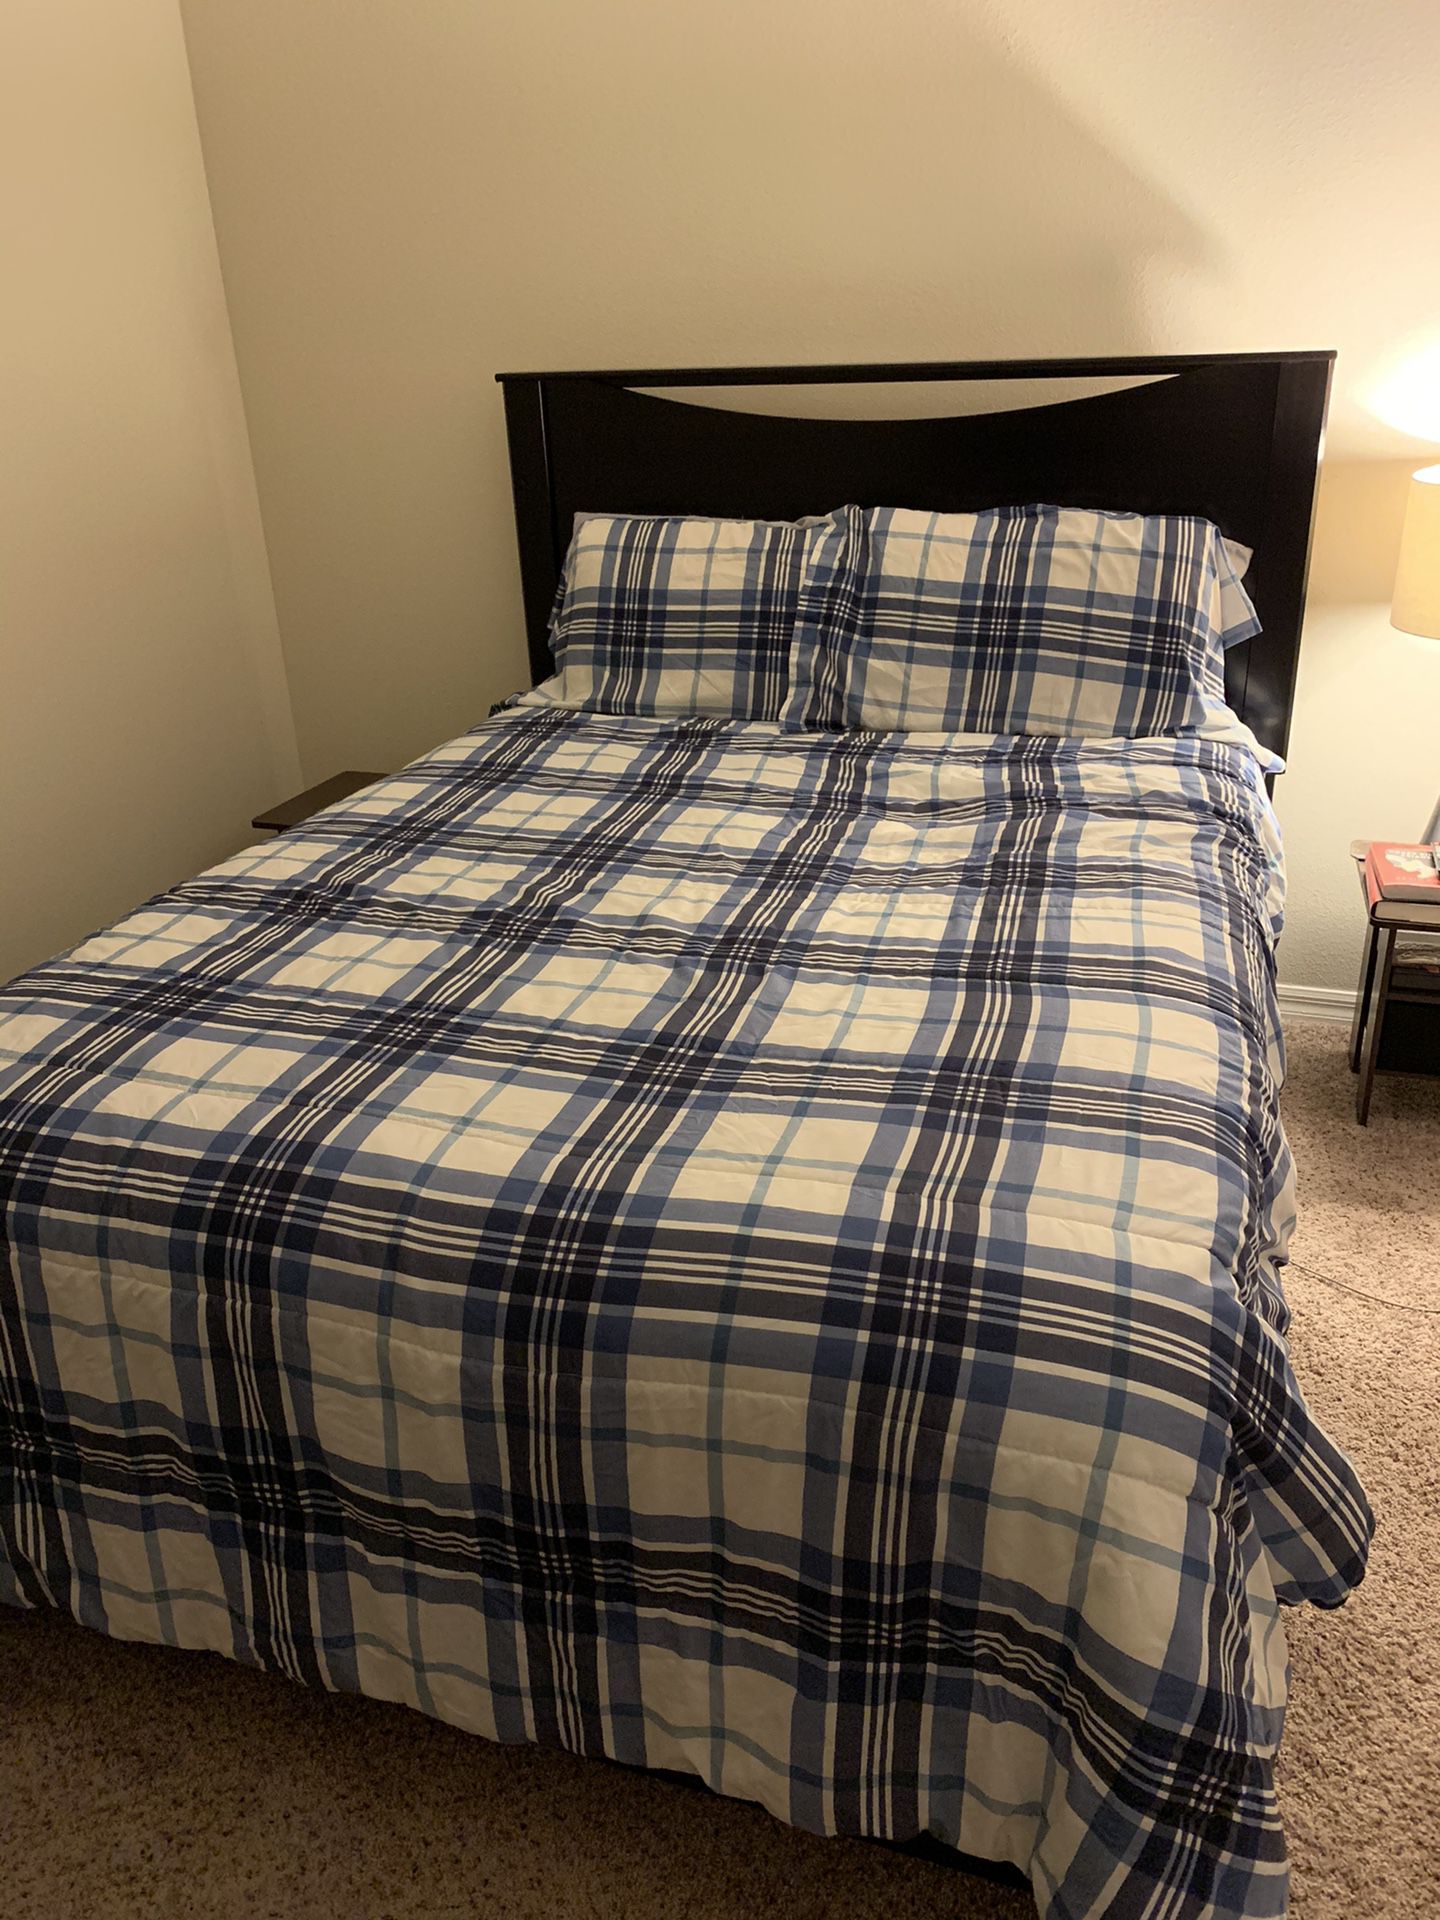 Queen Bed-set in great condition!